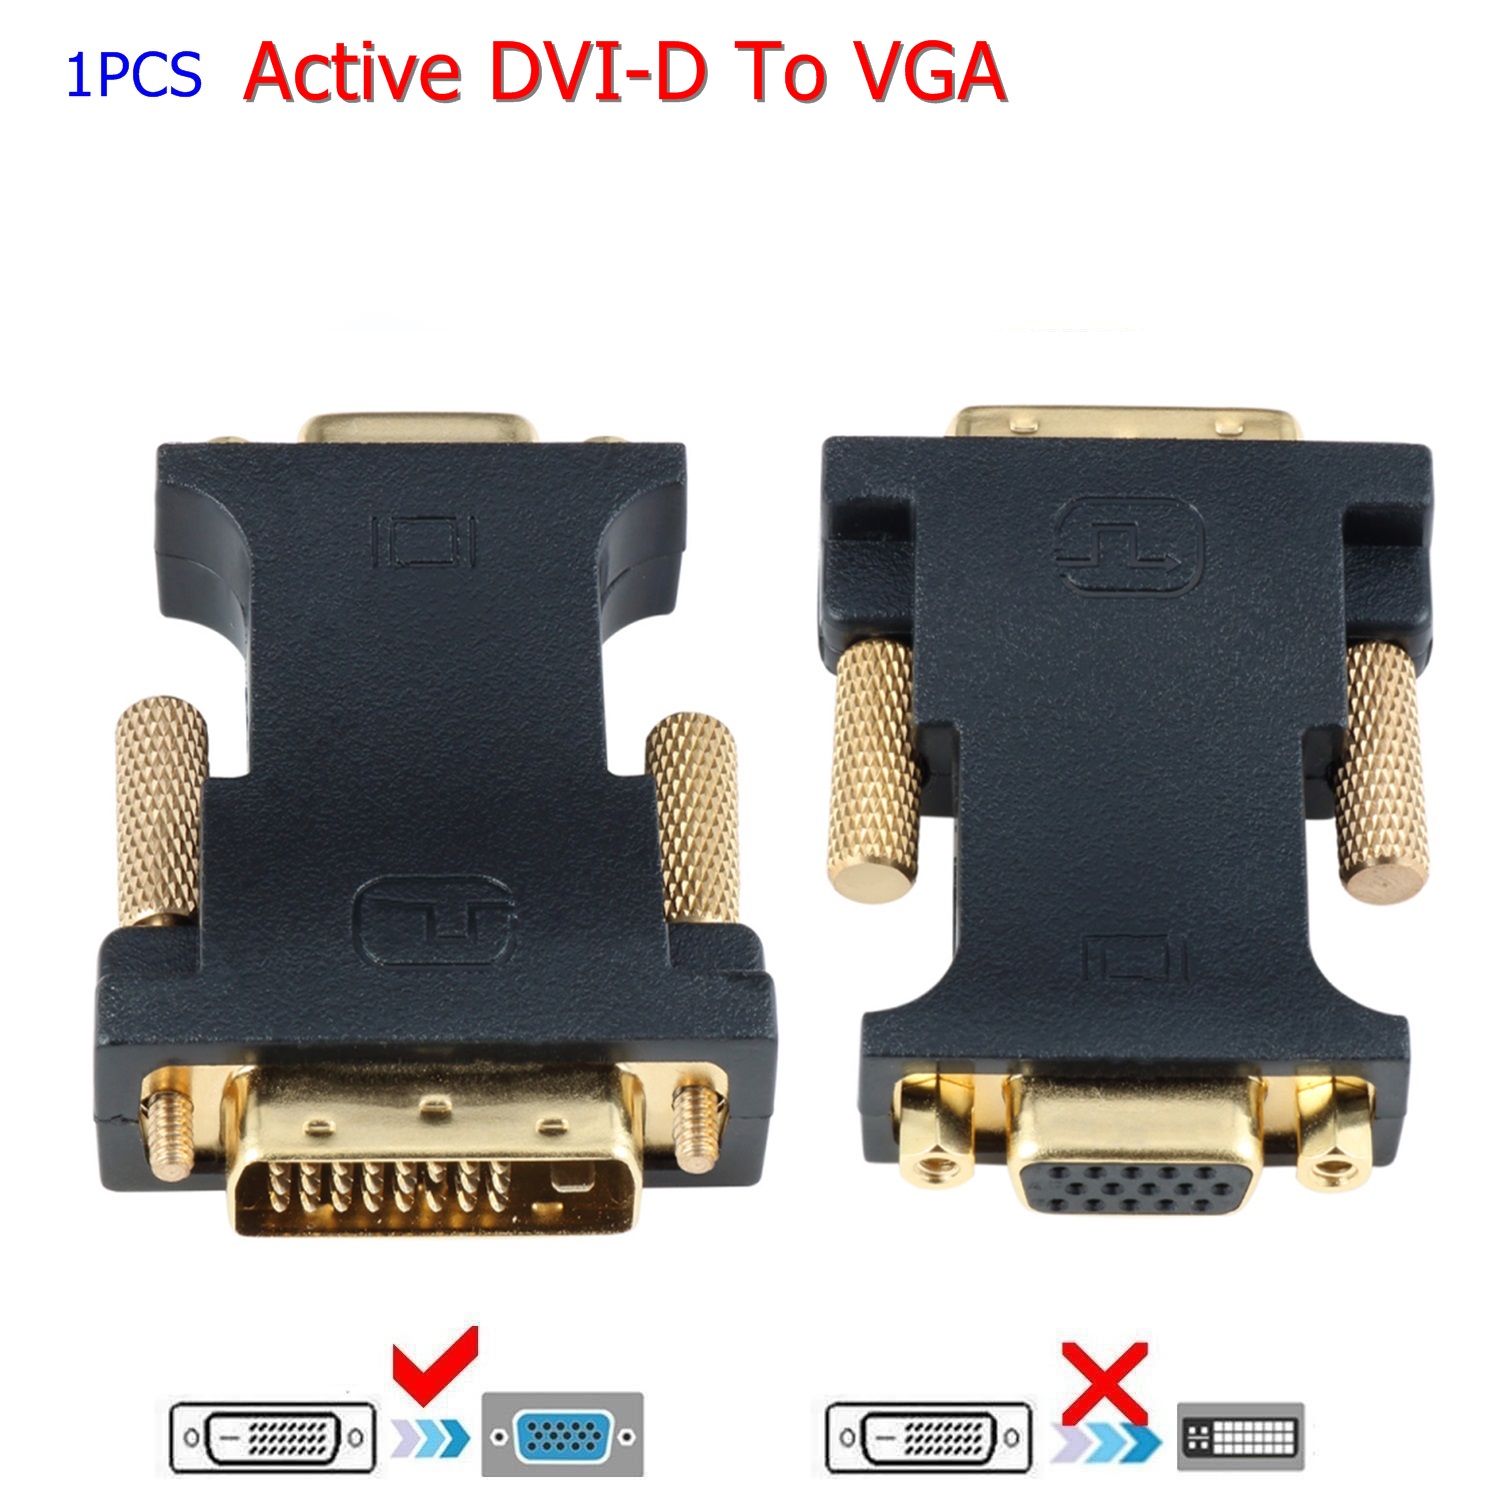 CableDeconn DVI VGA Adapter, Active DVI-D 24+1 to VGA Link Video Adapter Cable Converter for PC DVD Monitor HDTV (E0401)